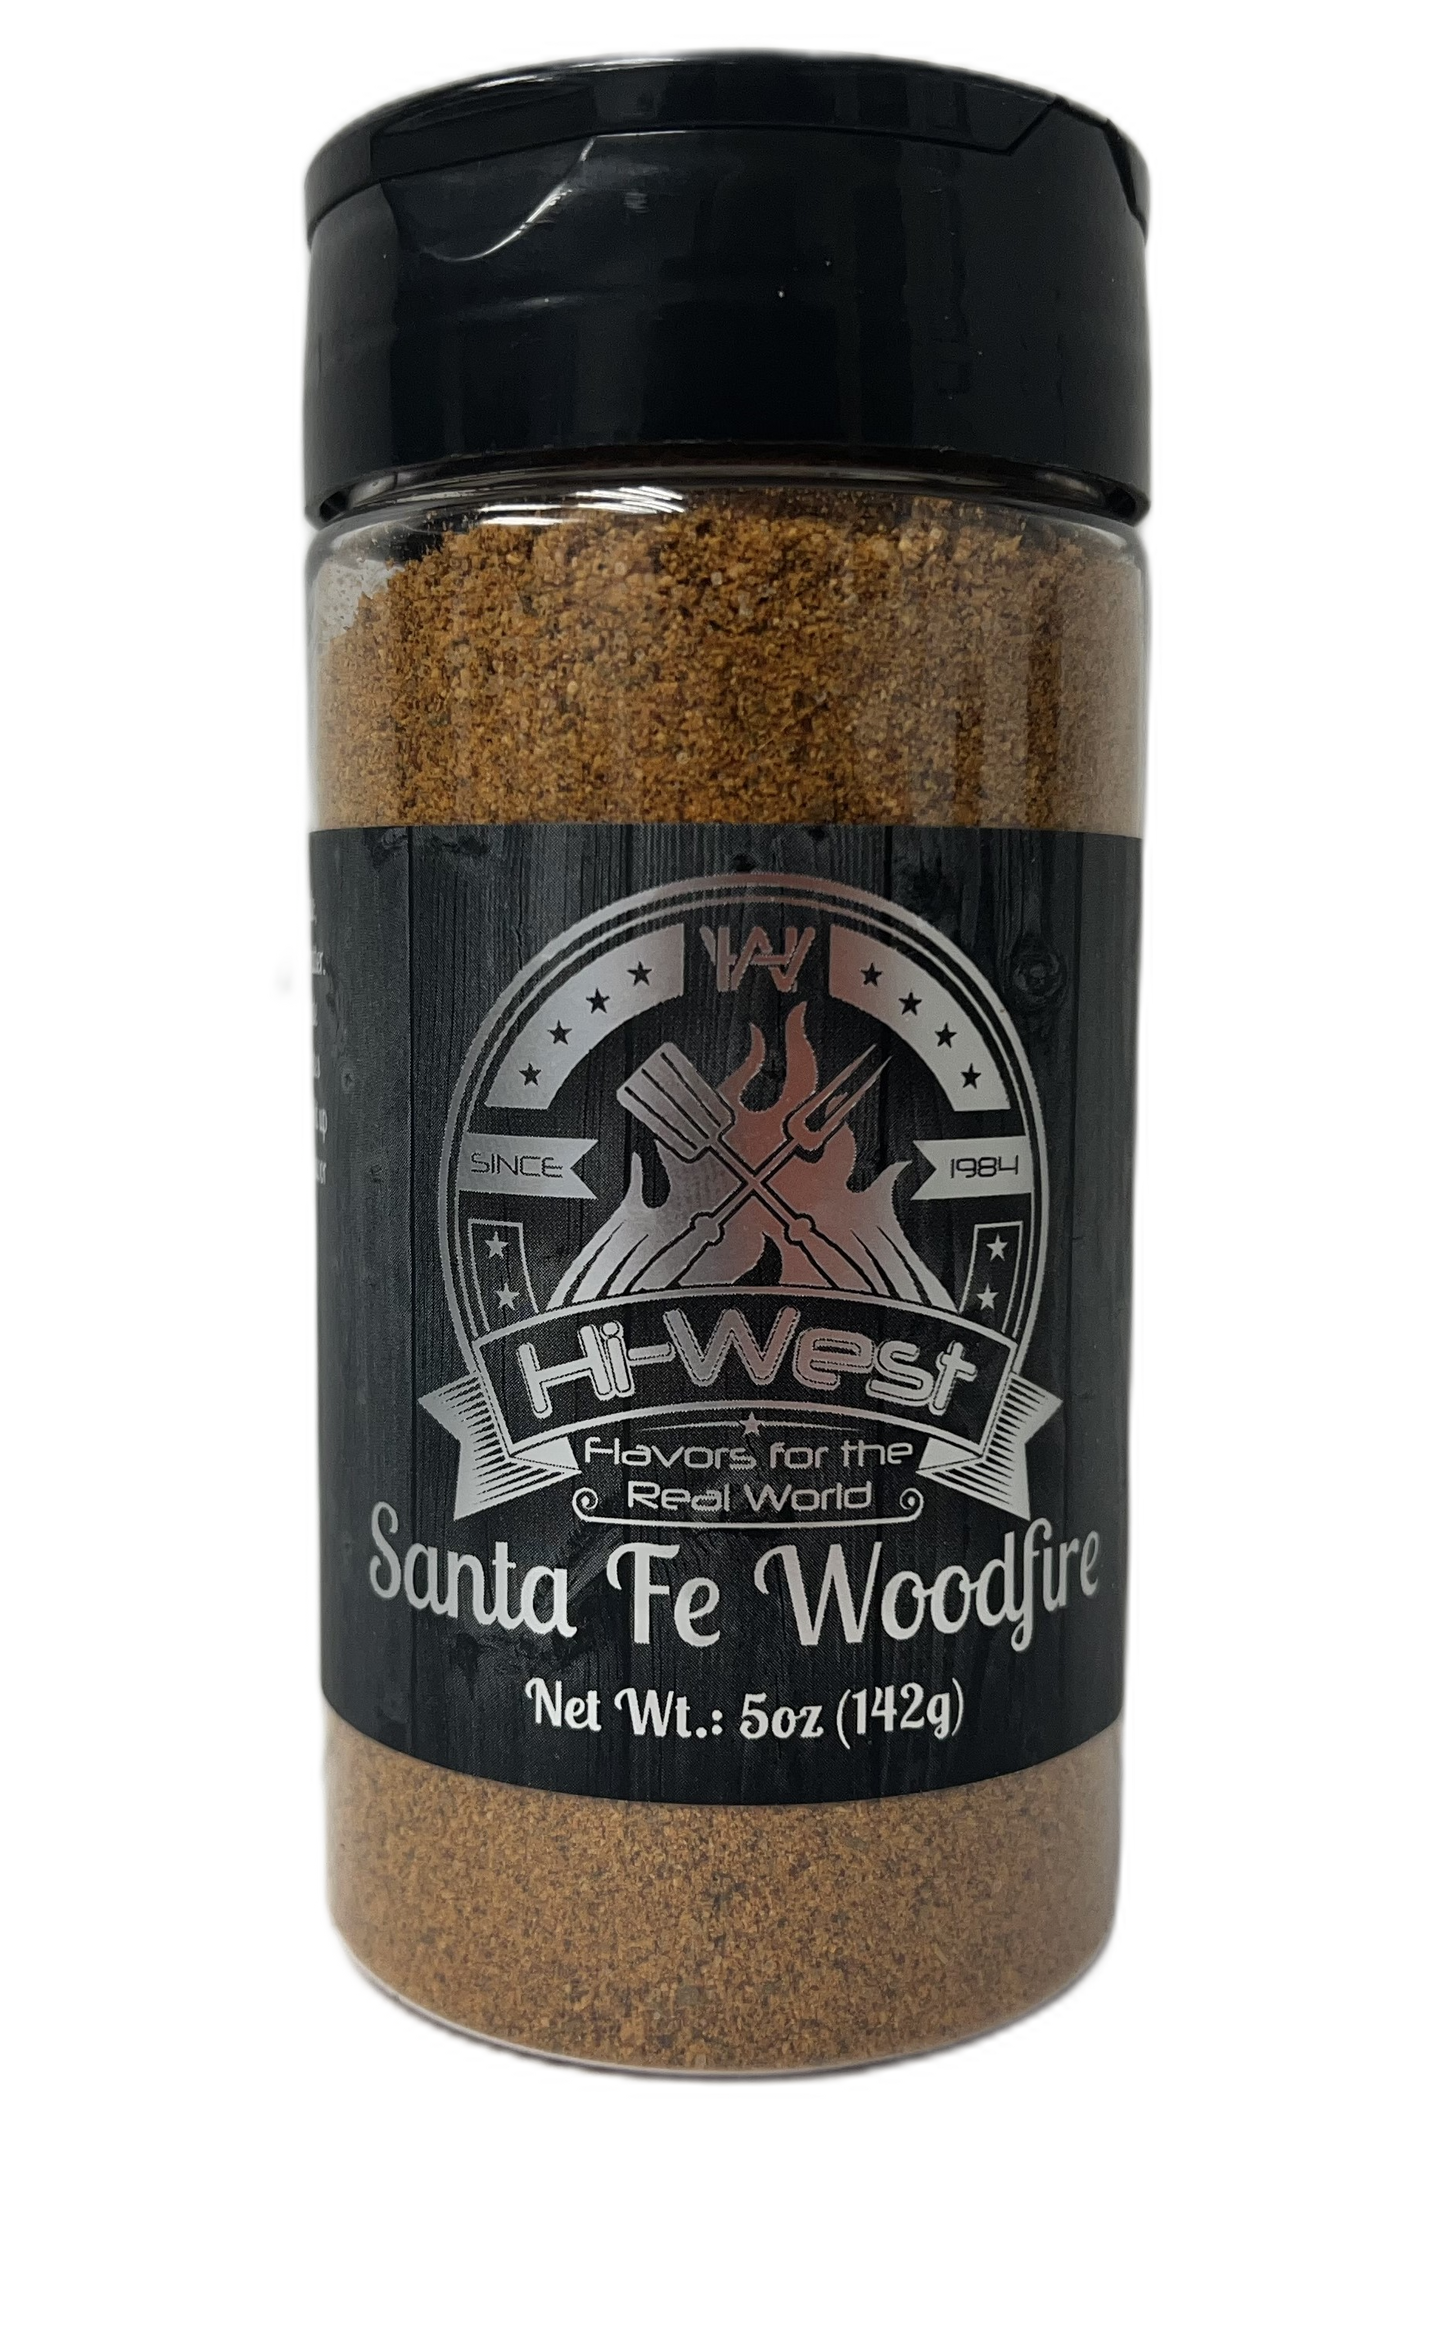 Hi-West Santa Fe Woodfire 5oz